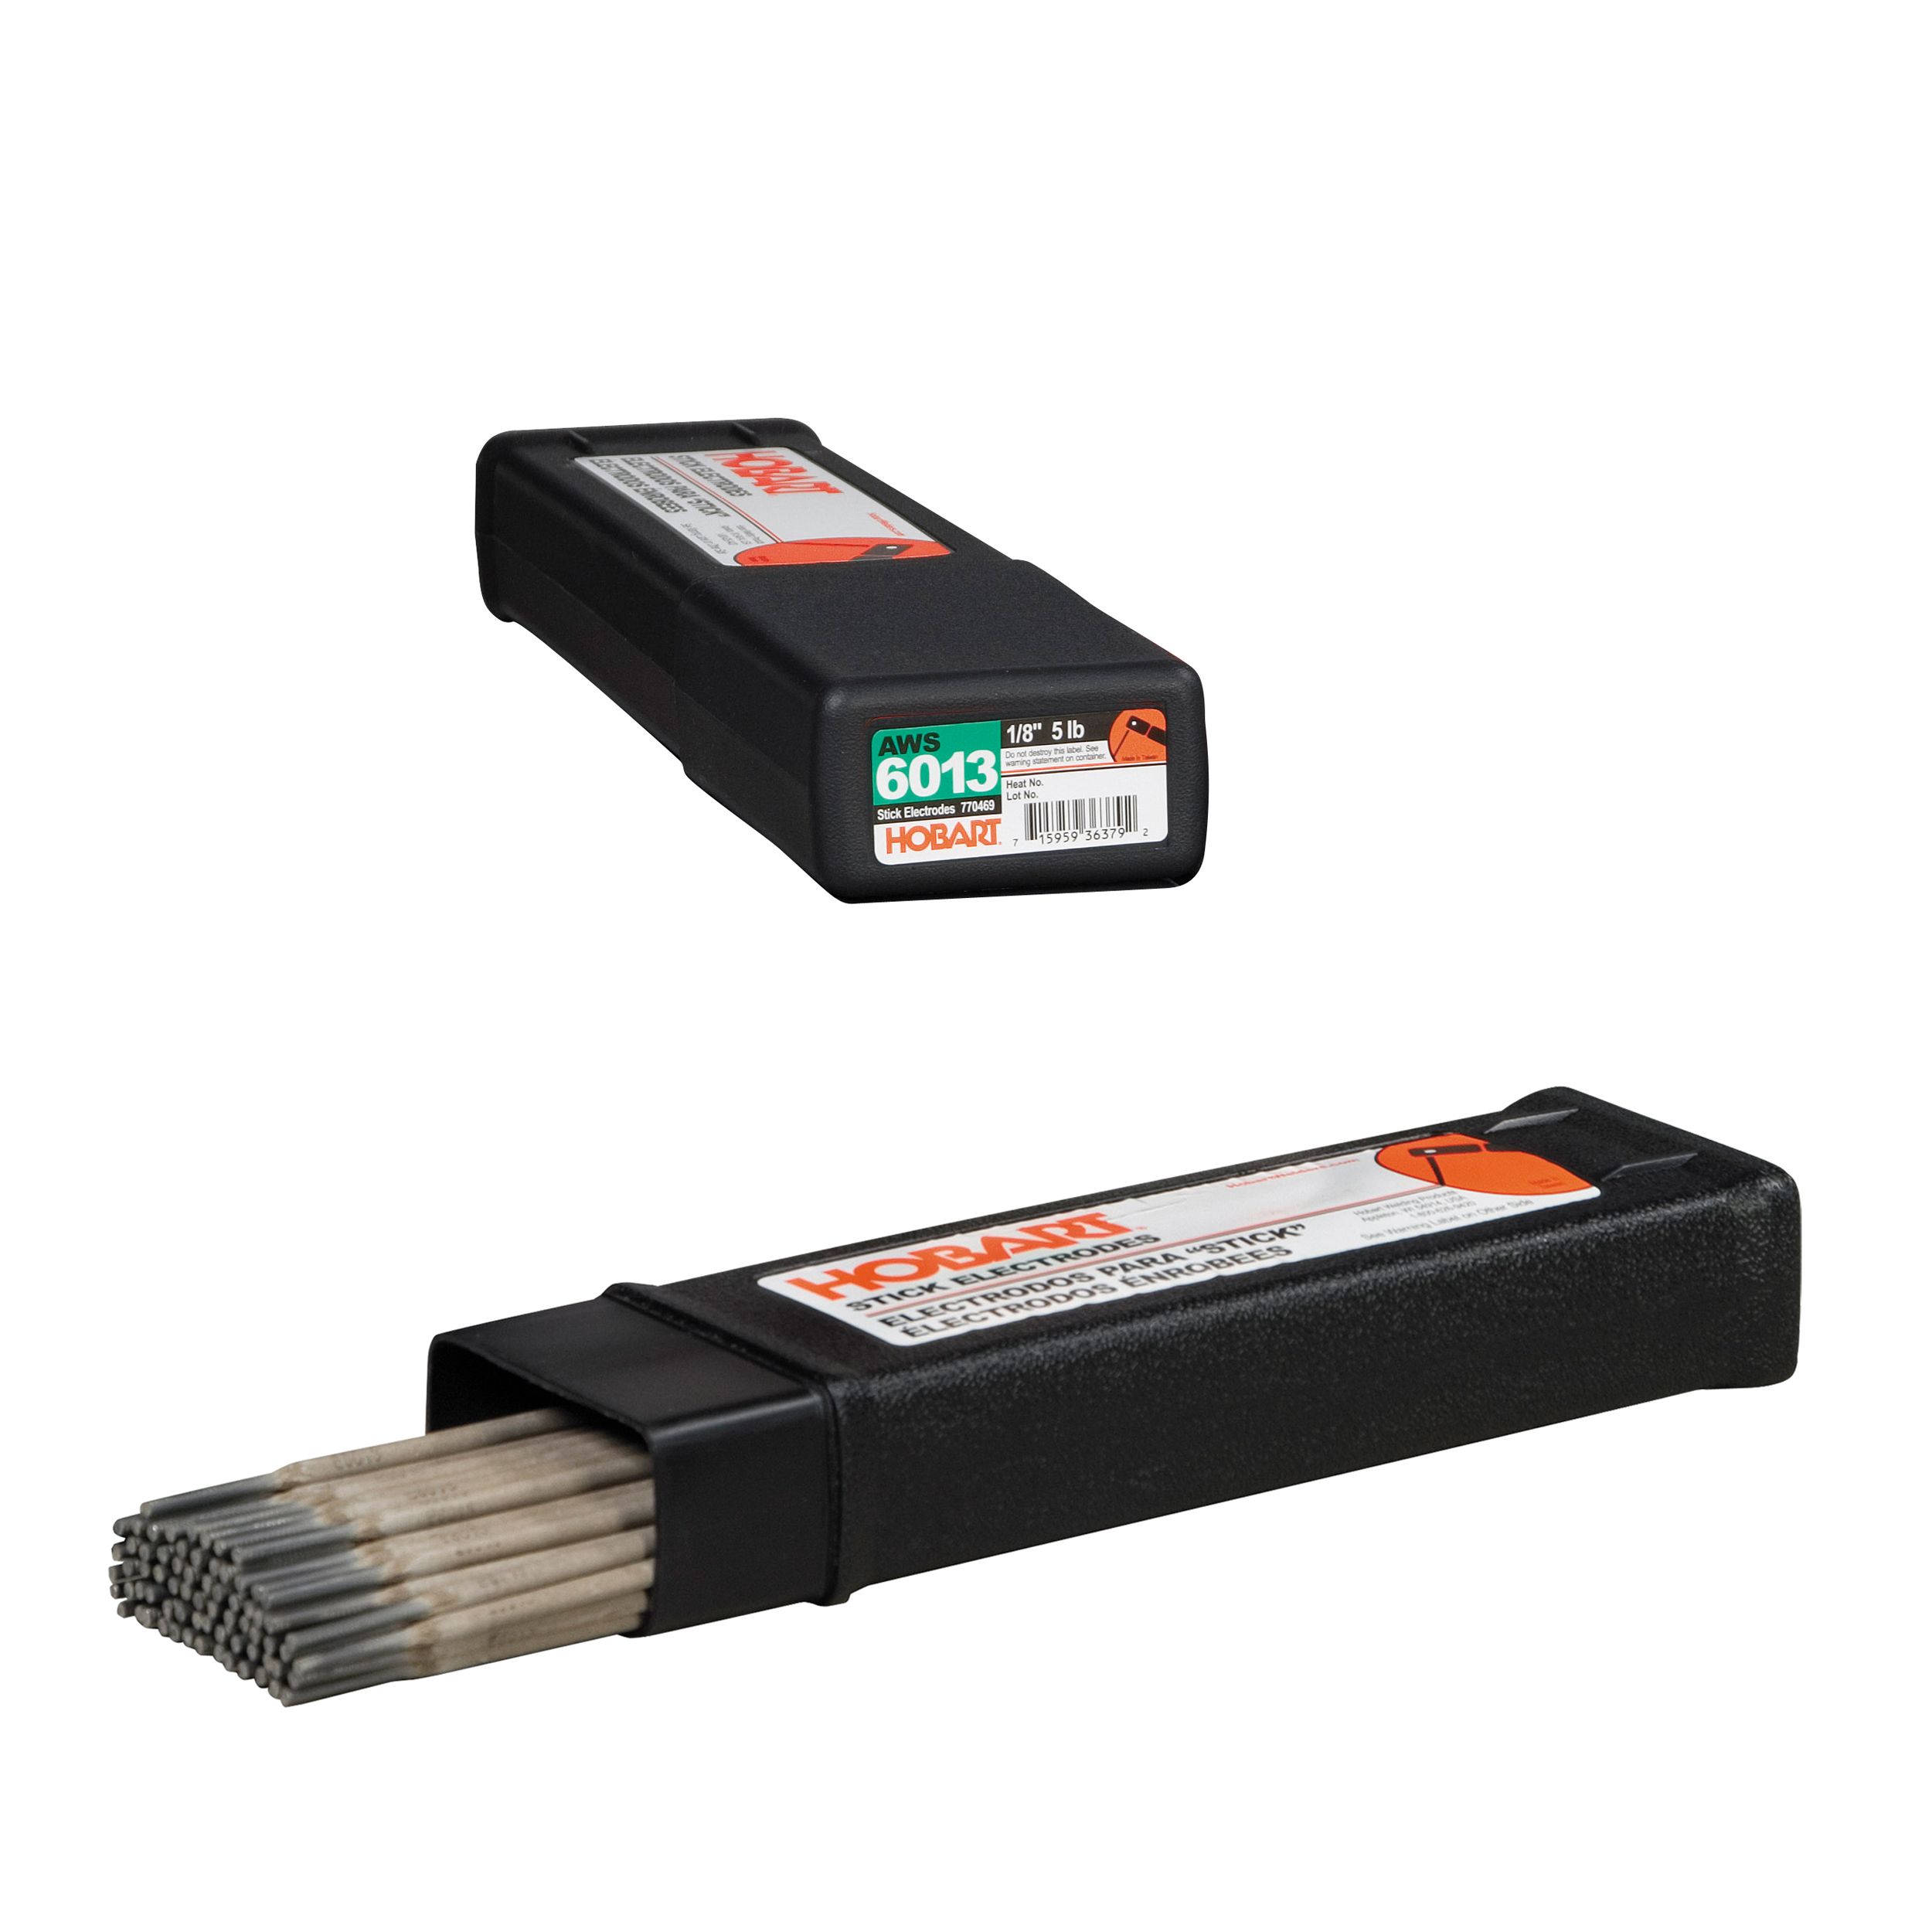 6013 Stick Electrode, All-Purpose, Light-To-Medium Penetrating, 1/8 - 5 lb.